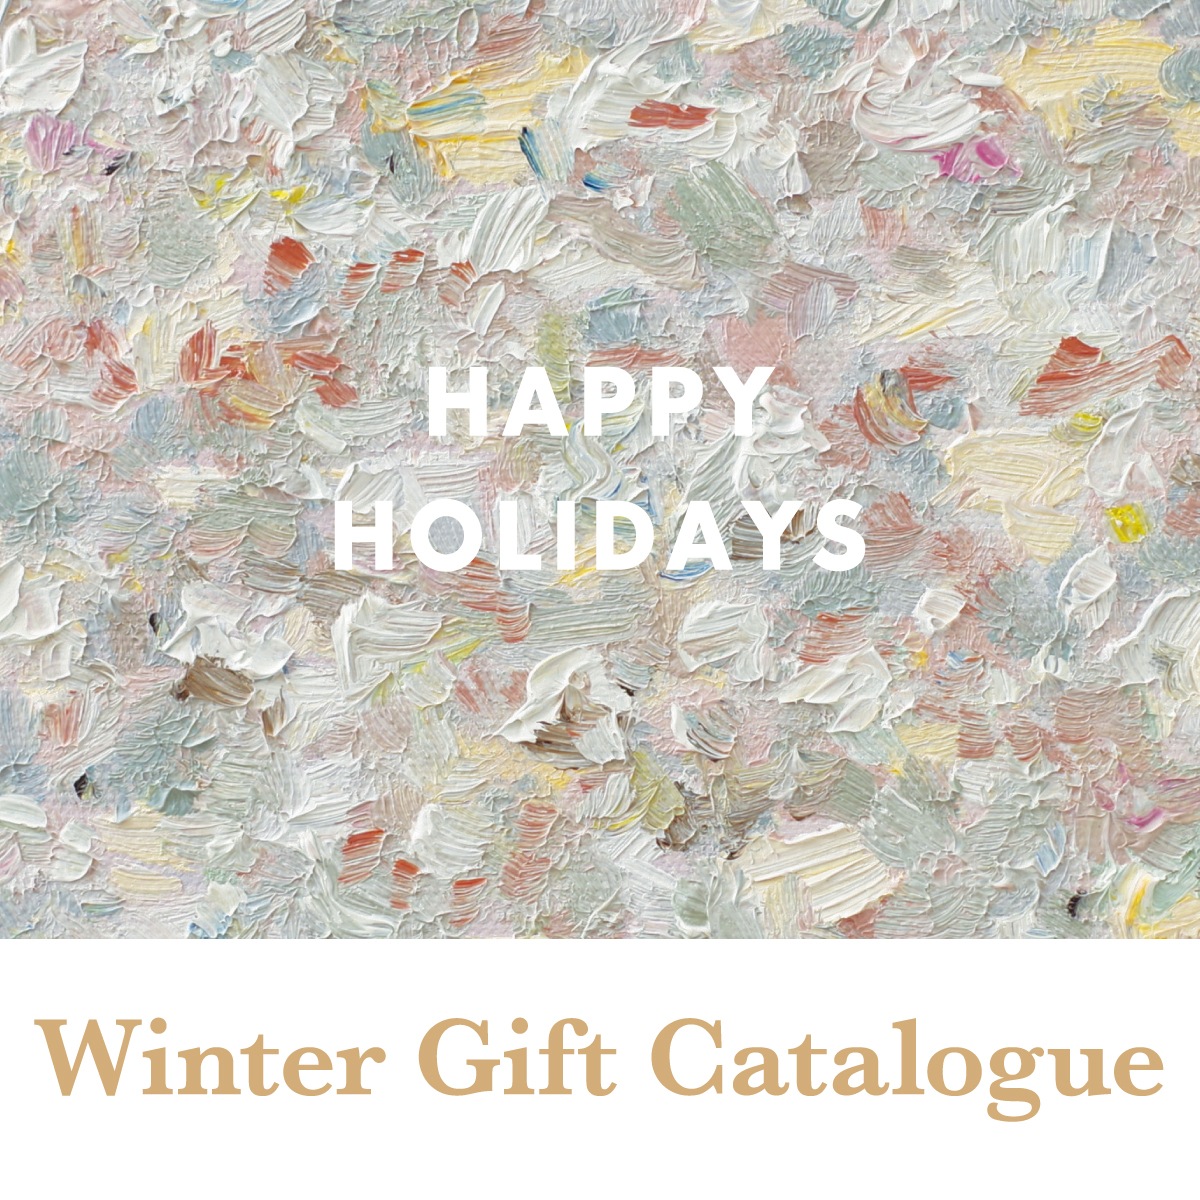 Winter Gift Catalogue